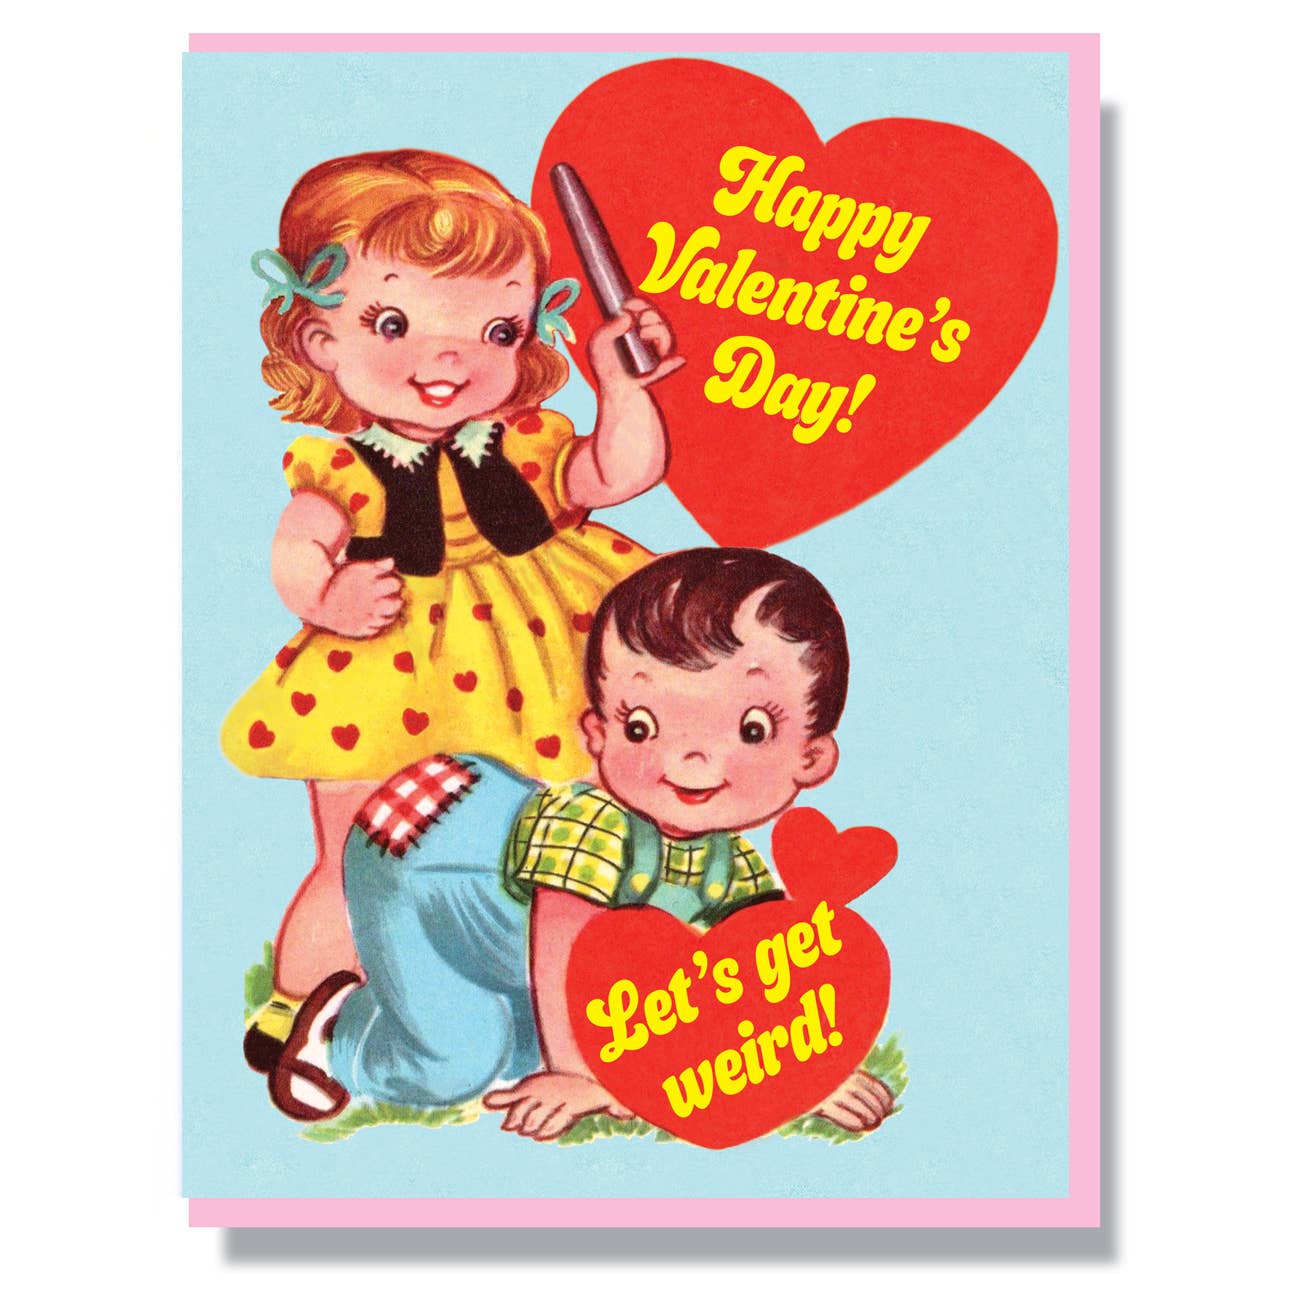 Greeting Card - Love: Happy Valentine's Day! Let's Get Weird!